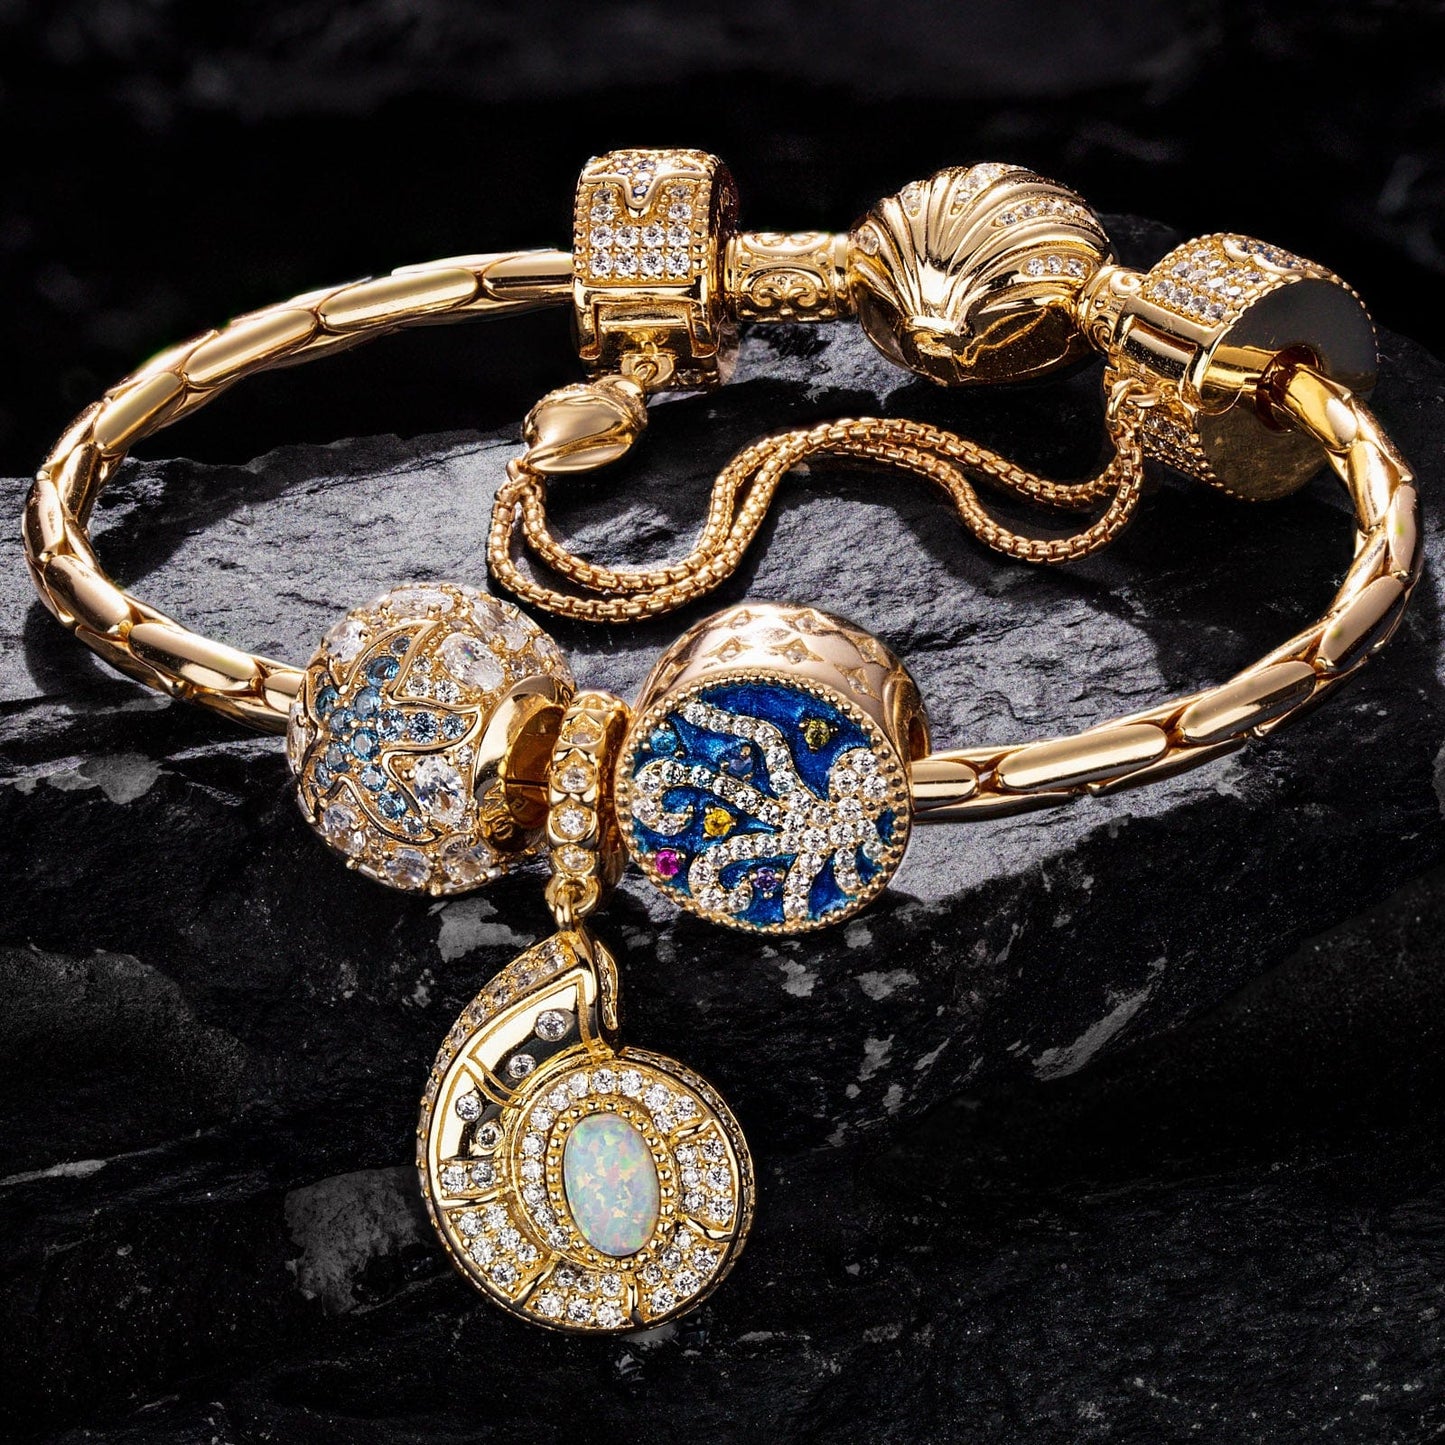 Sterling Silver Shimmering Ocean Jewels Charms Bracelet Set With Enamel In 14K Gold Plated